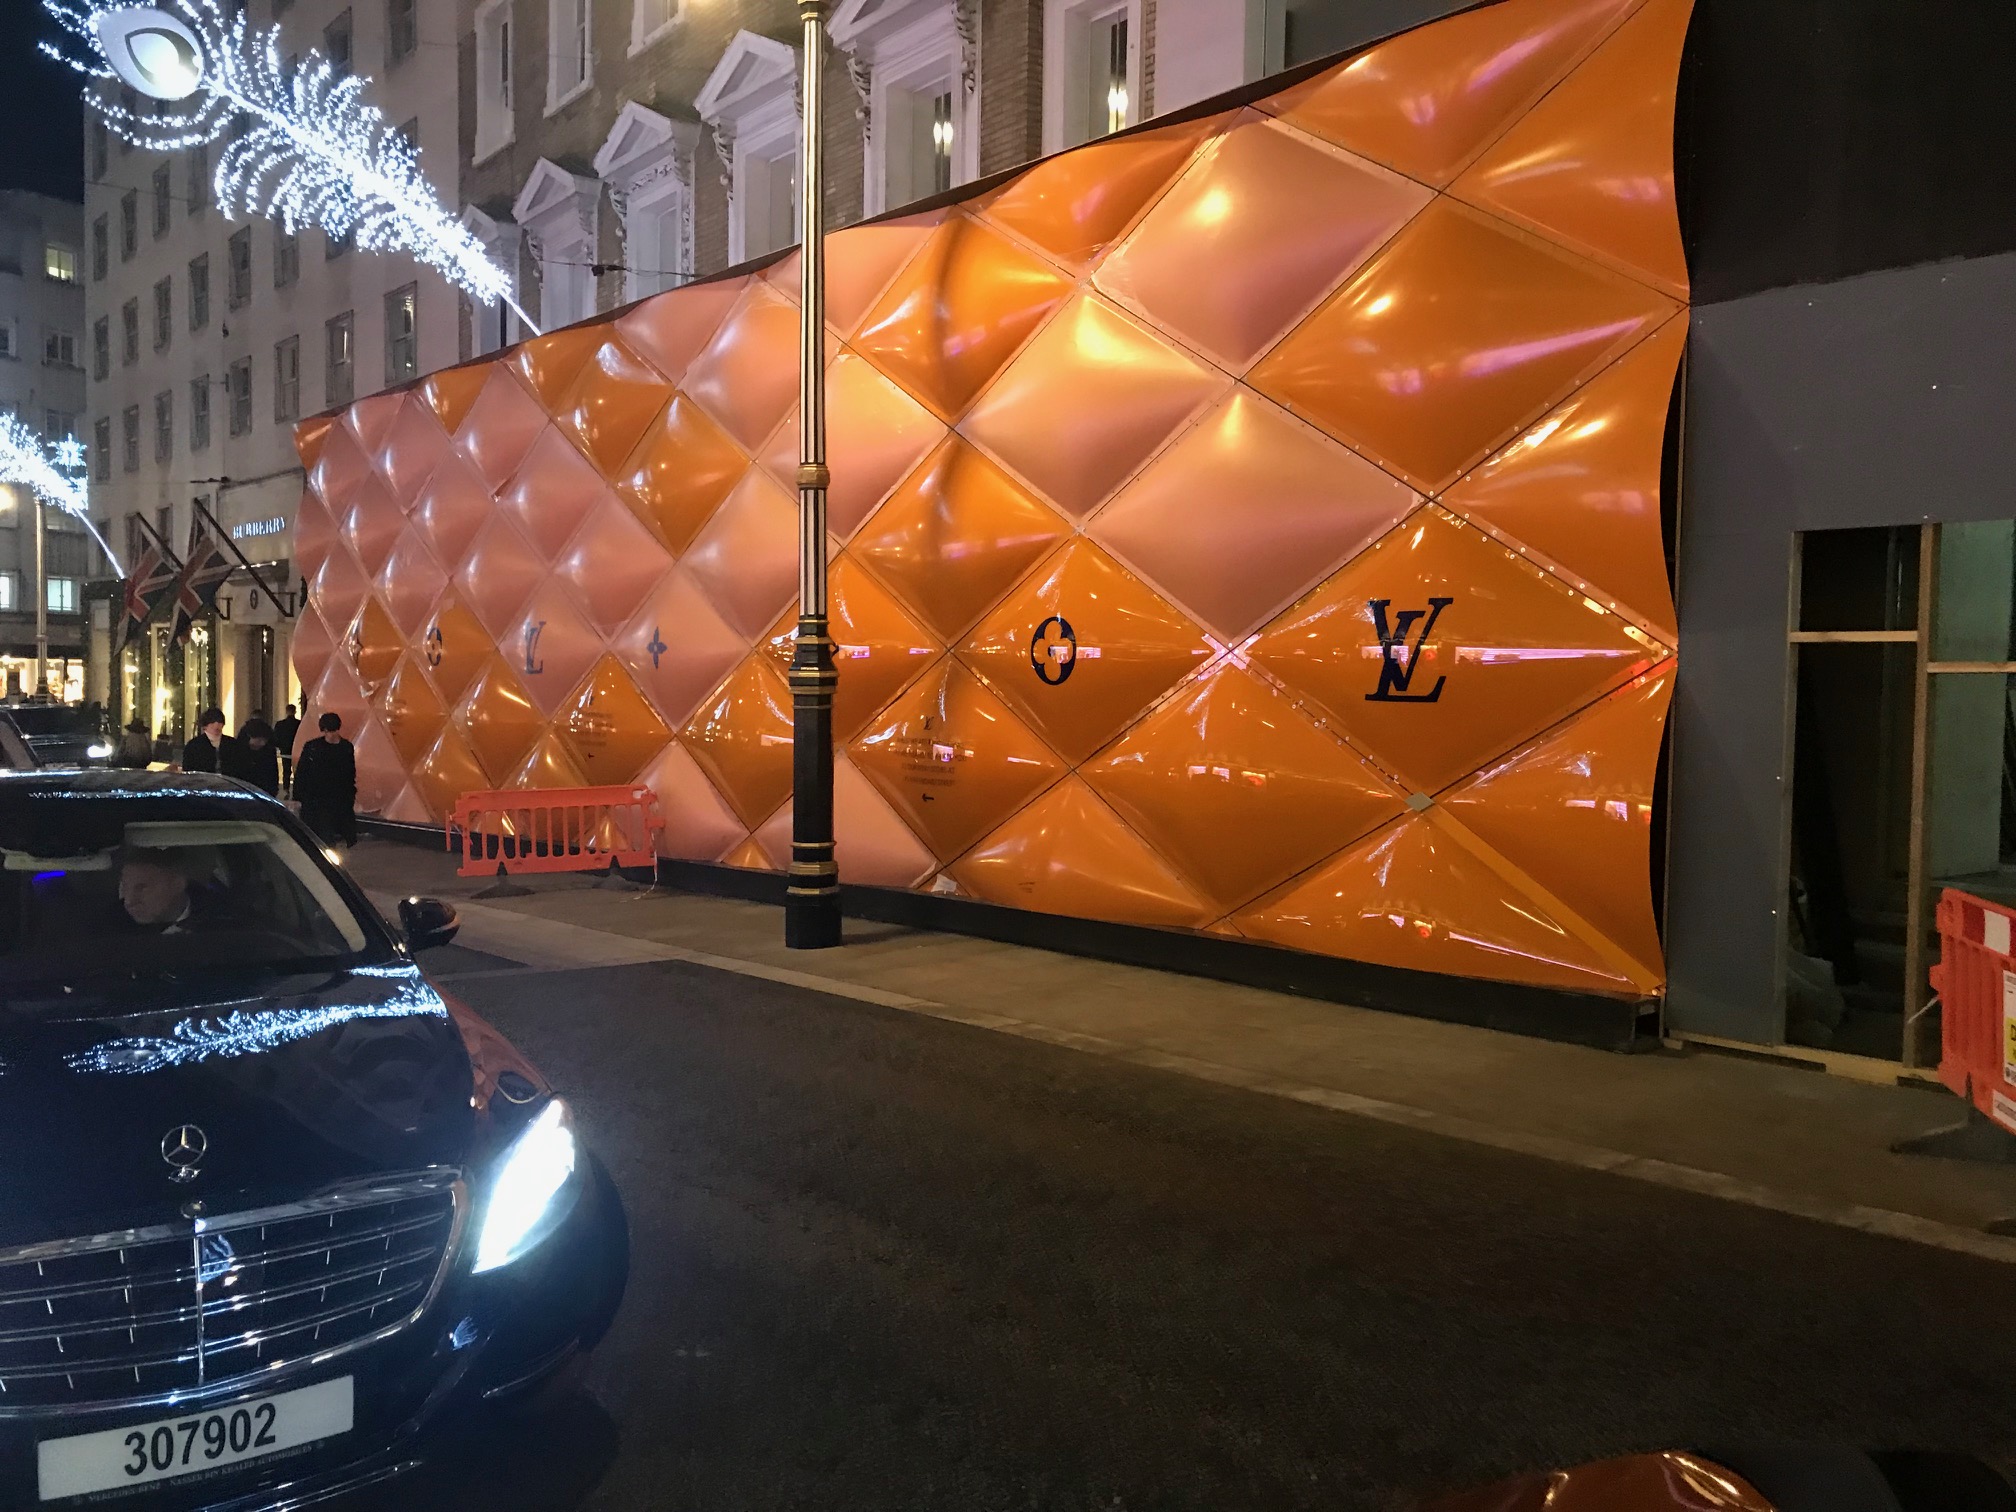 Louis Vuitton large advertising hoarding on New Bond street